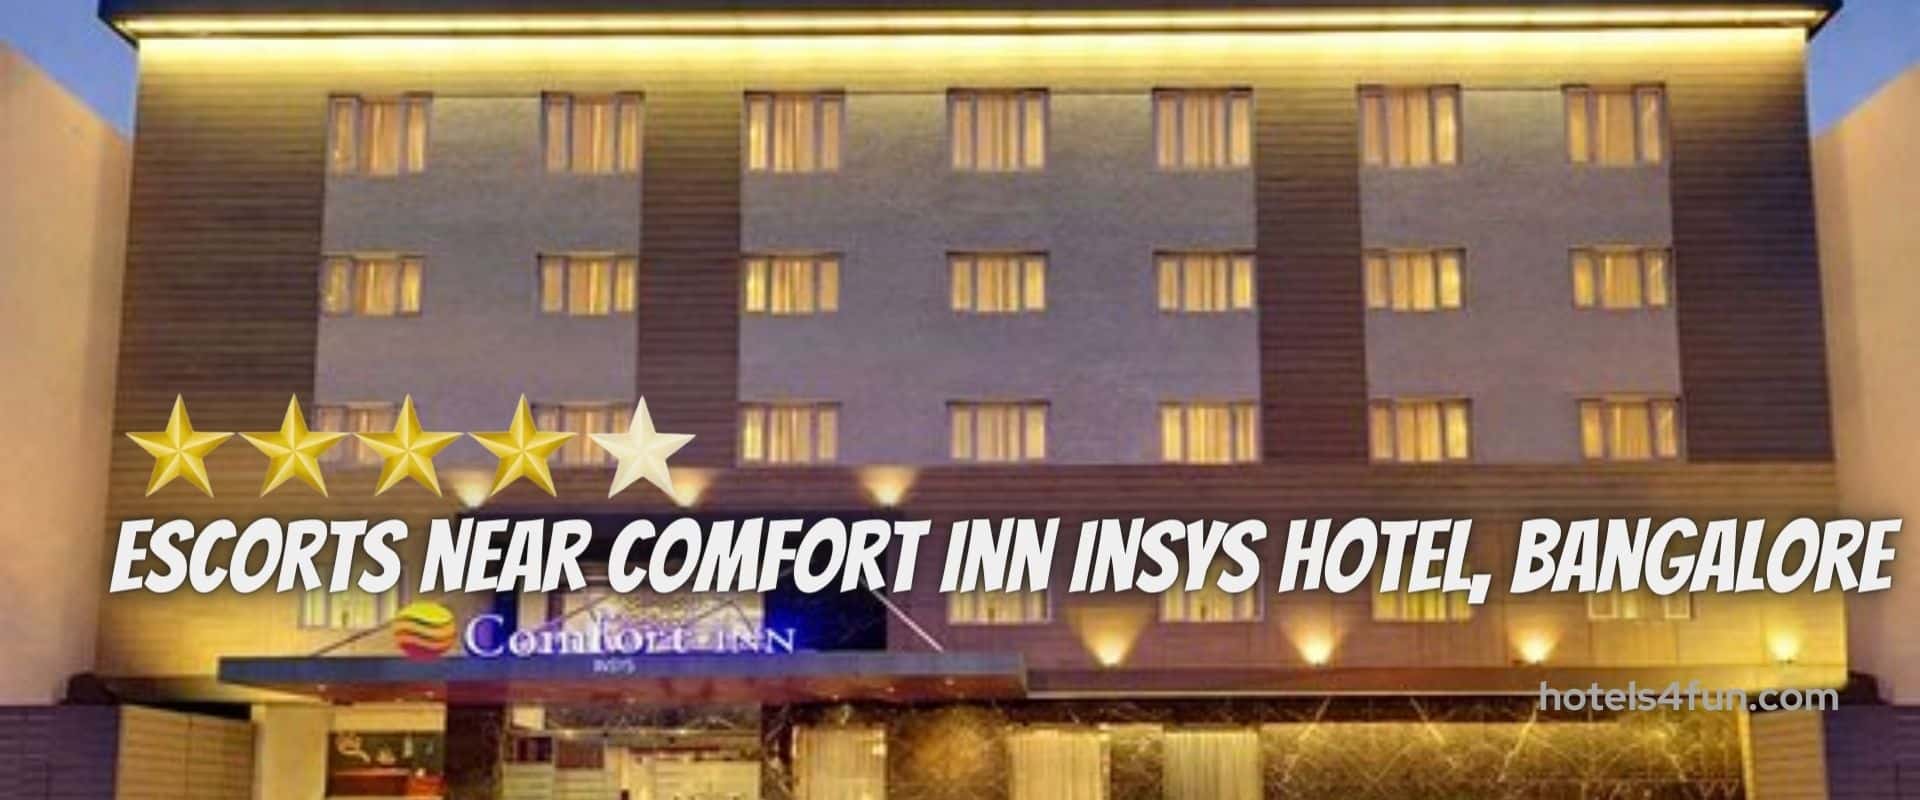 escorts-near-comfort-inn-insys-hotel-bangalore Hotel Escorts